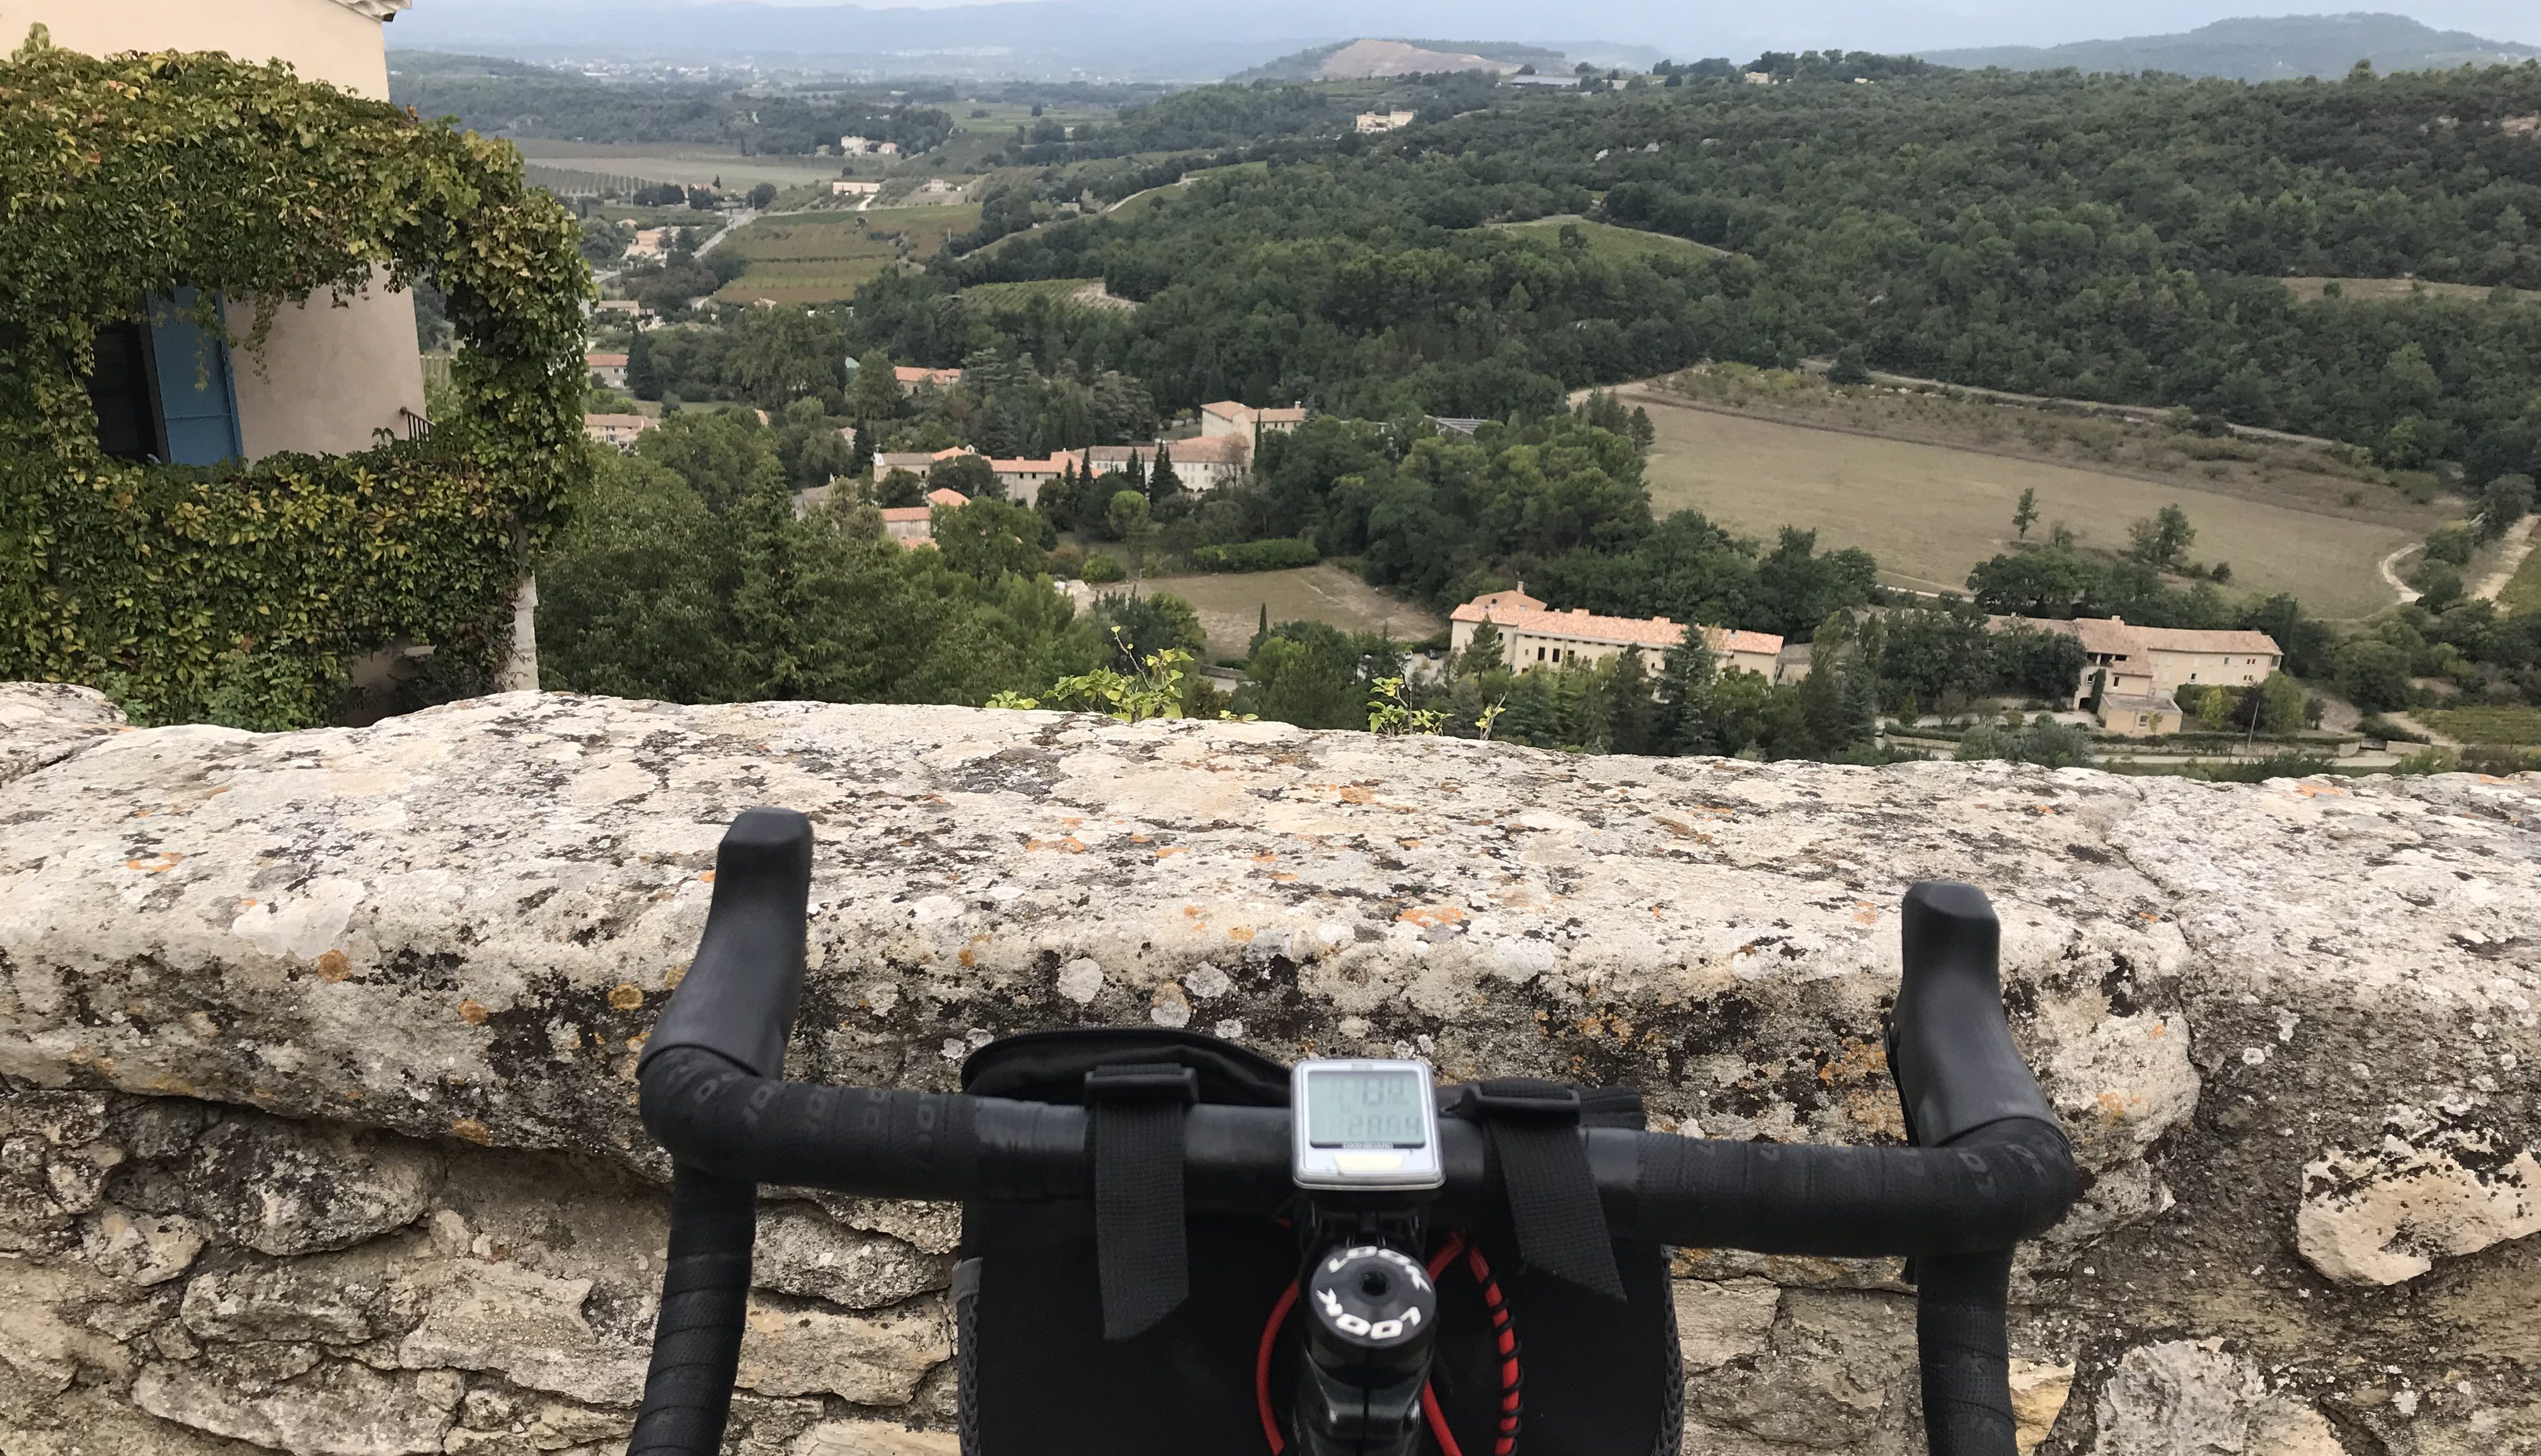 The Biking France Blog